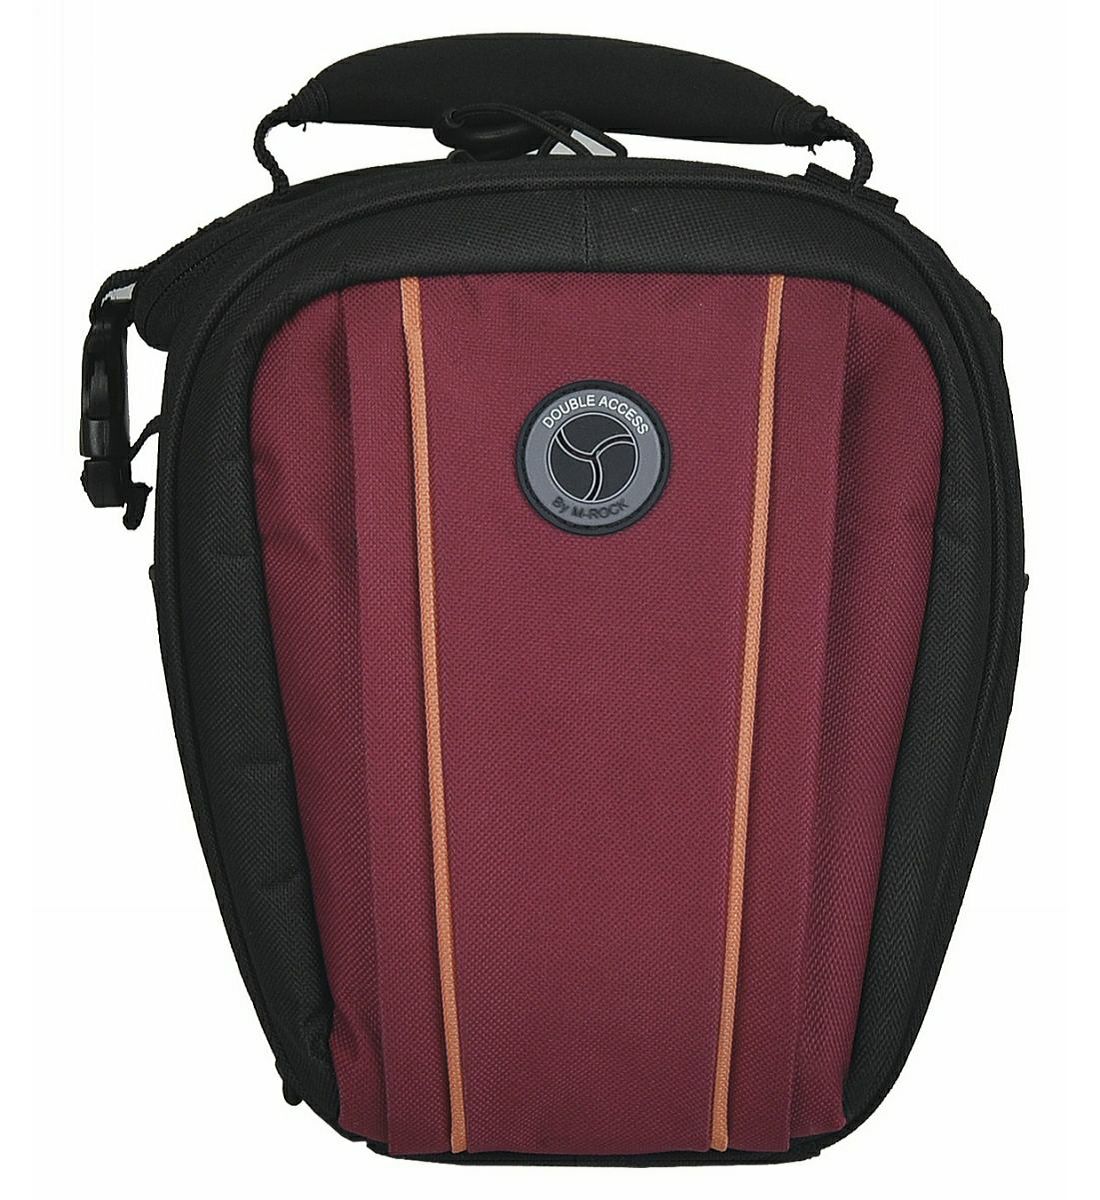 M-Rock MR4030-8 Yellowstone Red rot crvena torba za DSLR fotoaparat Double access Holster bag